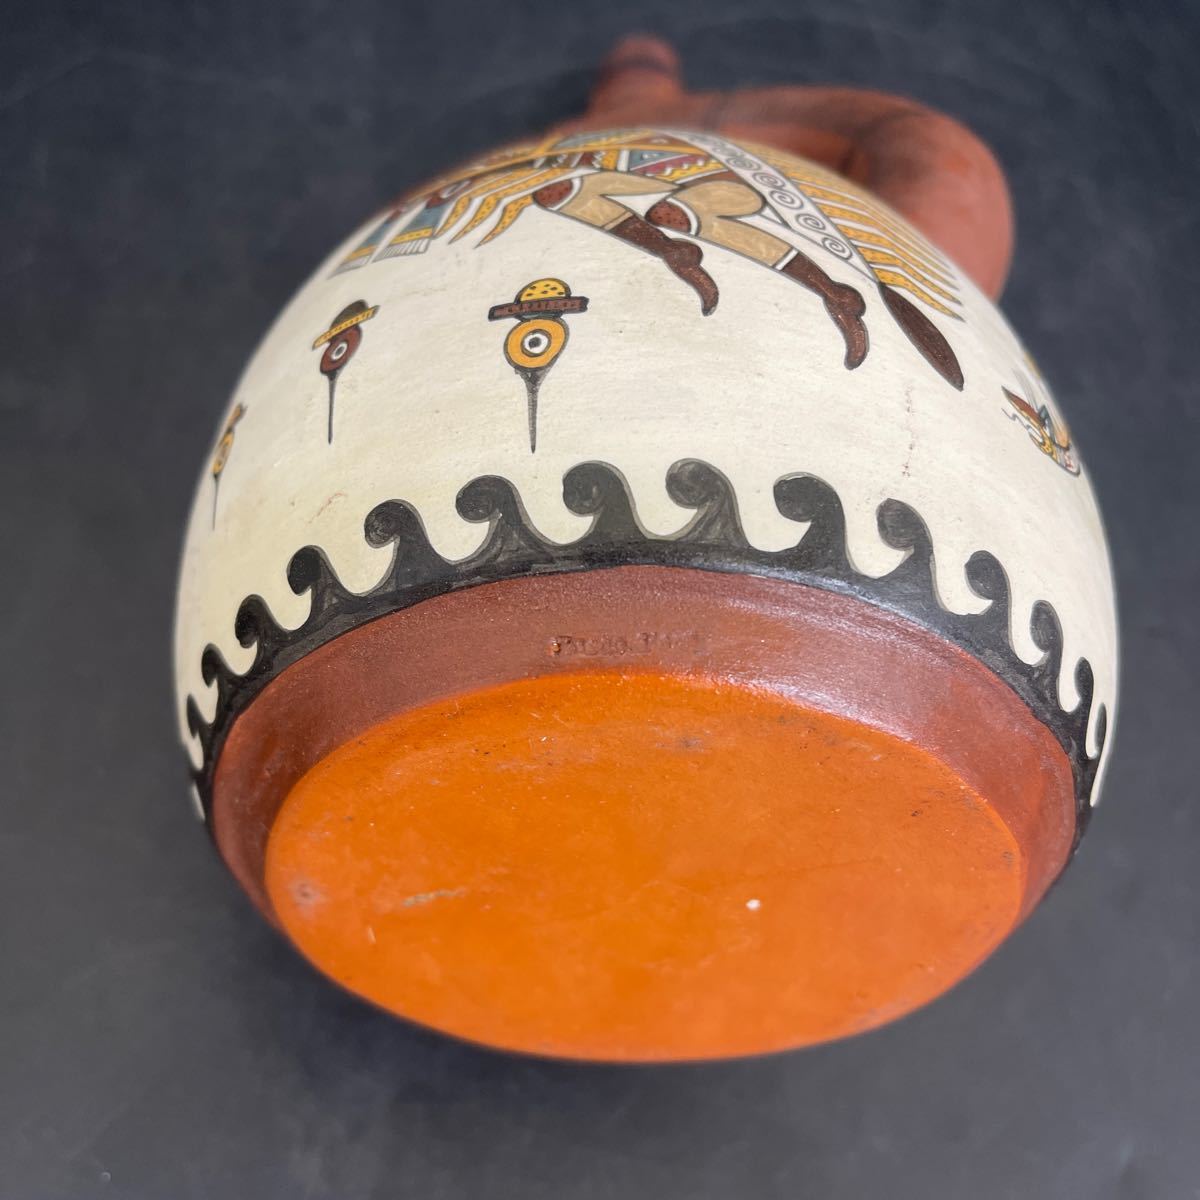 B12211706 ペルー モチェ文化土器 鐙型注口土器 インテリア チャビン文化様式から続く鐙形注口を持つ細くすっきりした印象の平底球形の土器_画像10